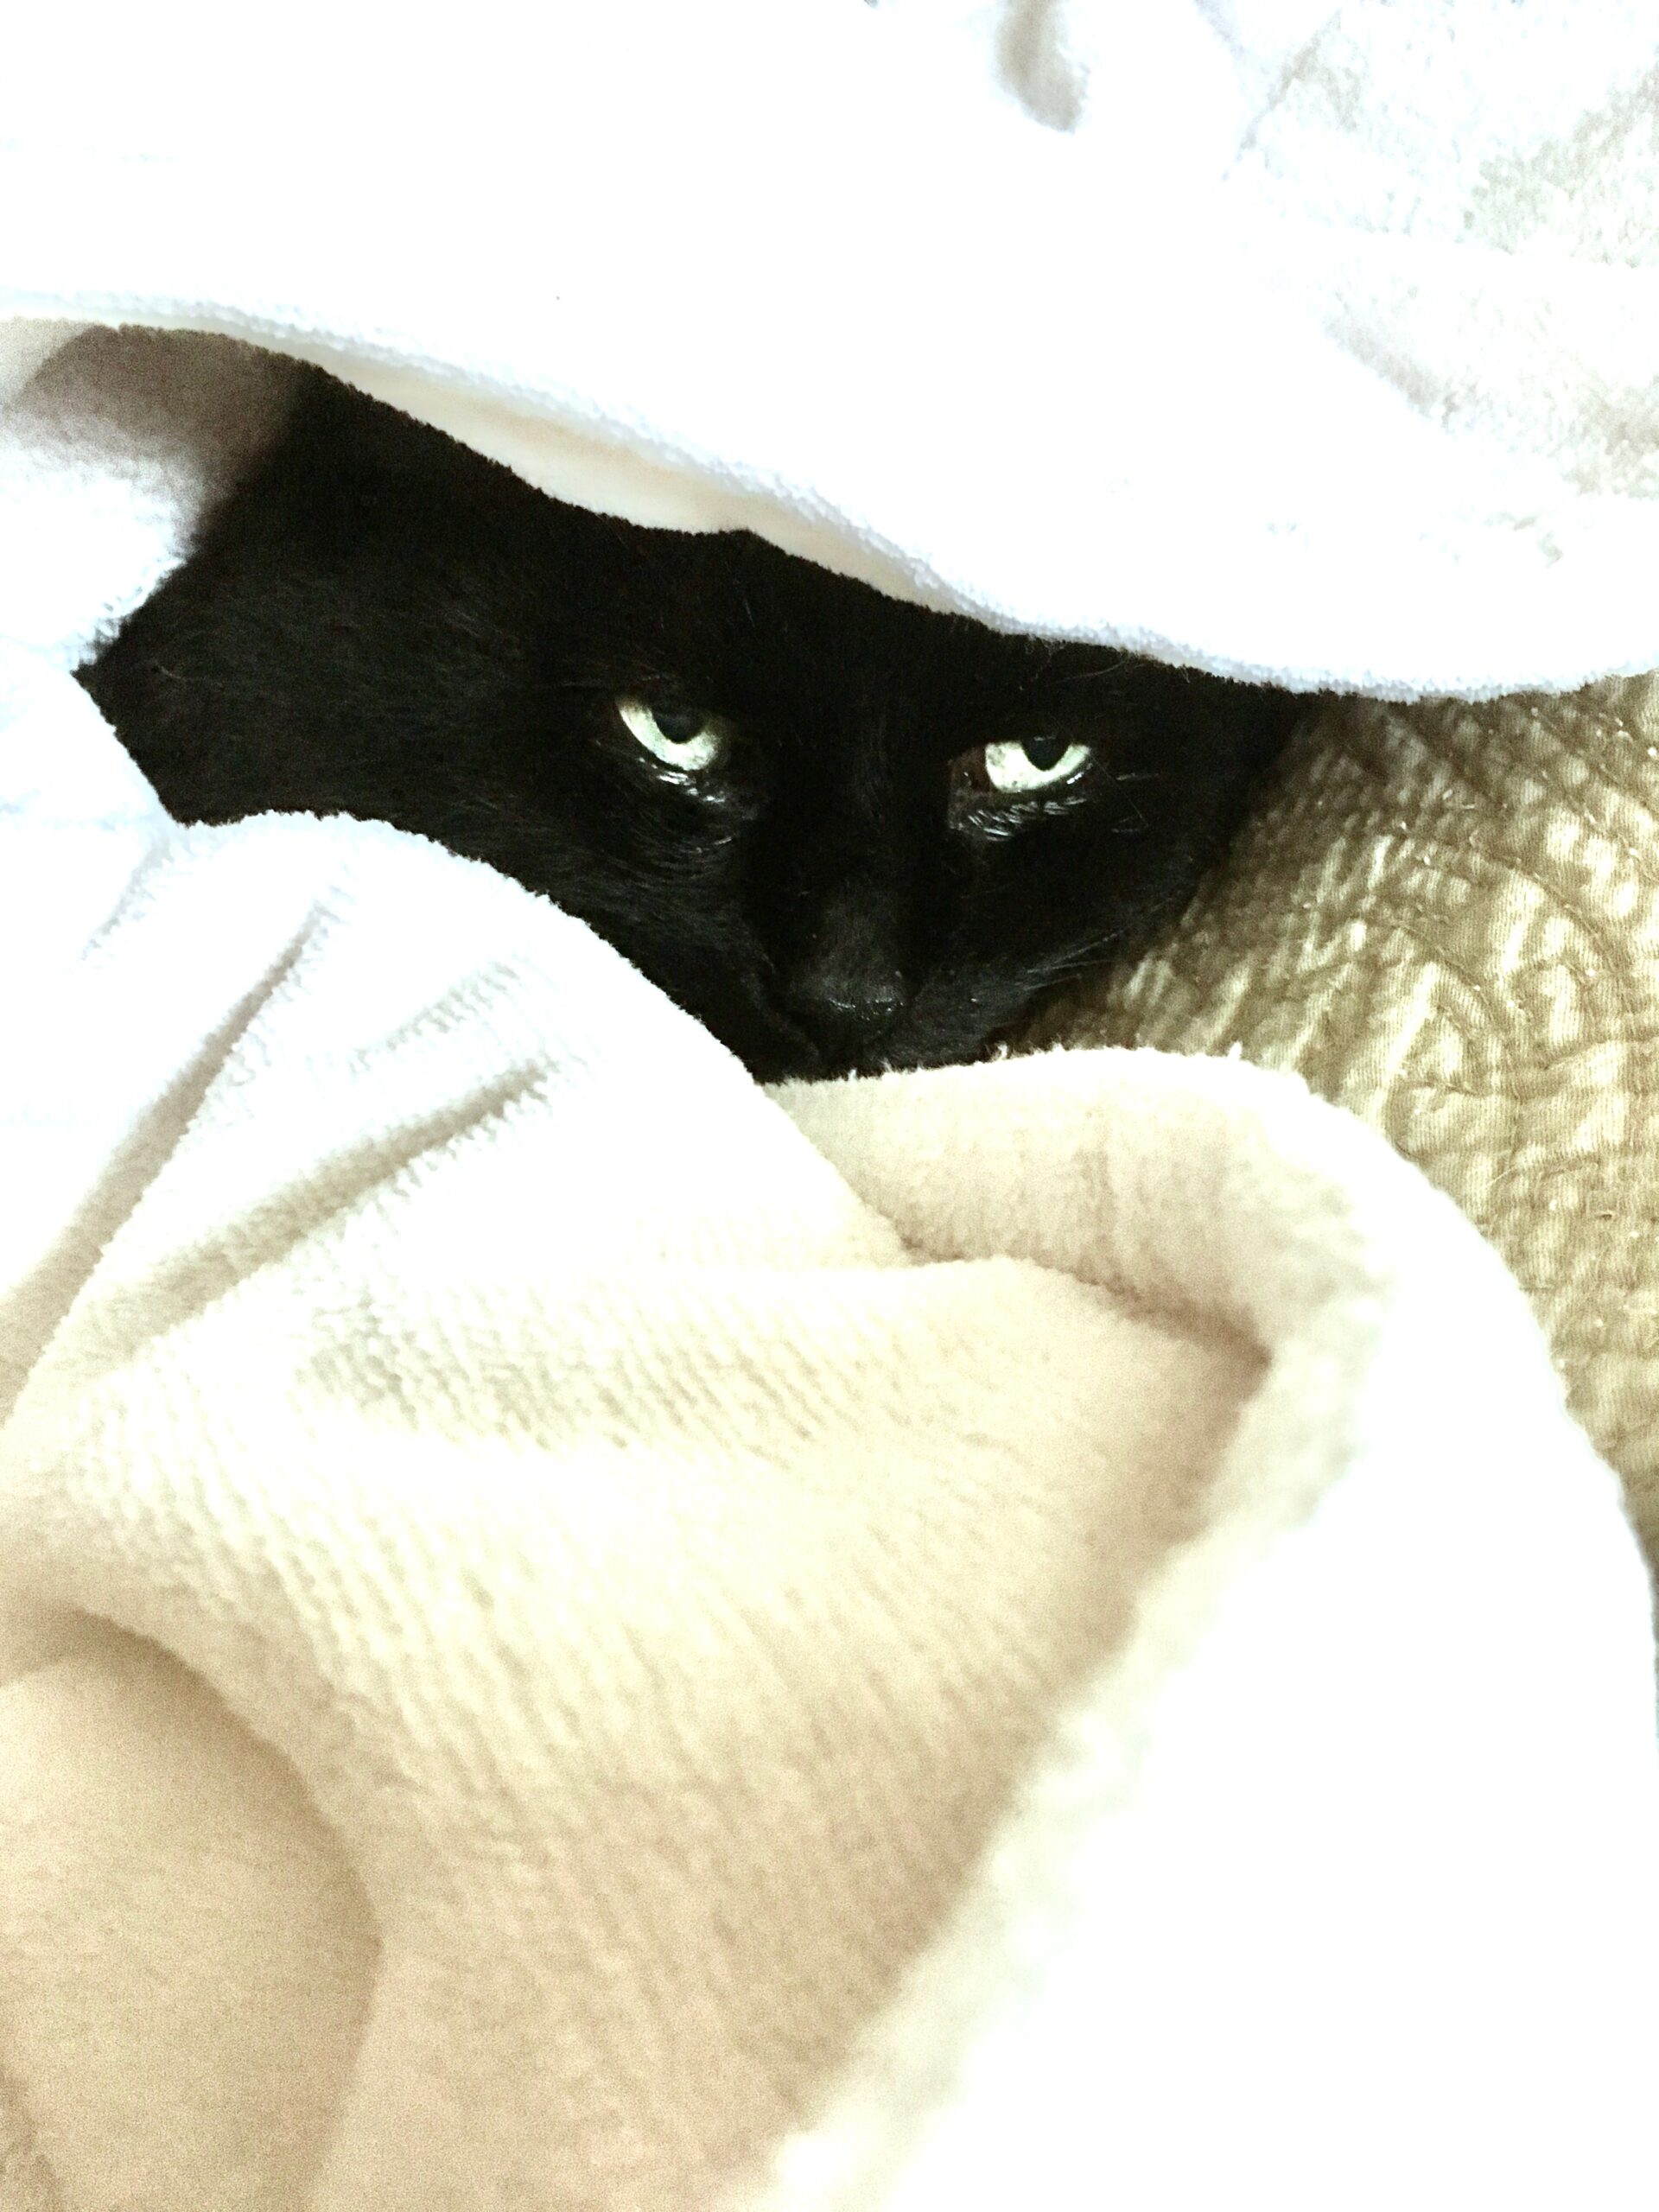 A black cat under a blanket.